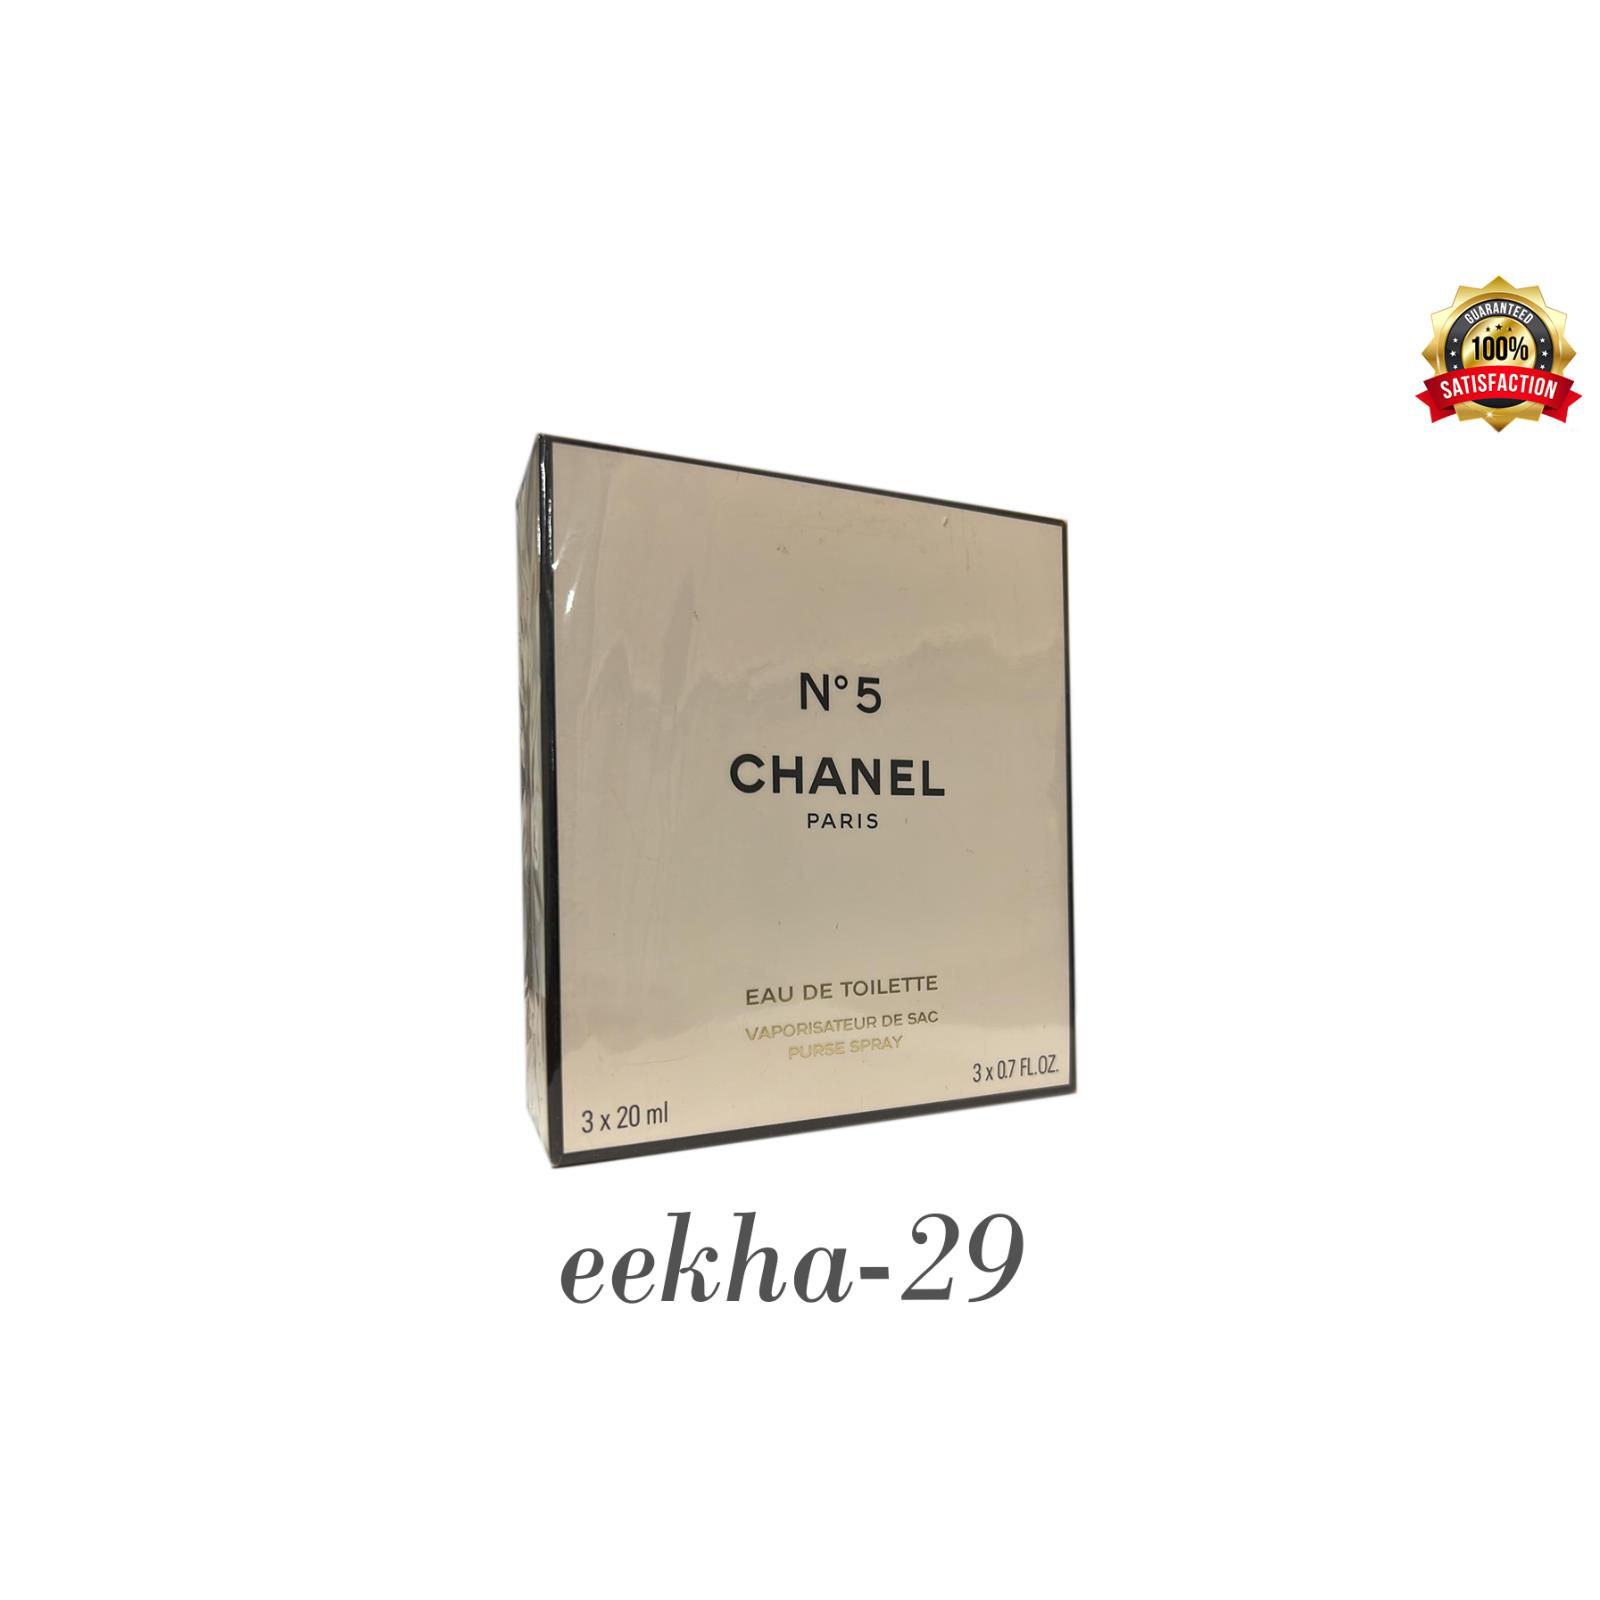 Chanel No 5 Eau De Toilette 3 20 Ml Twist and Spray